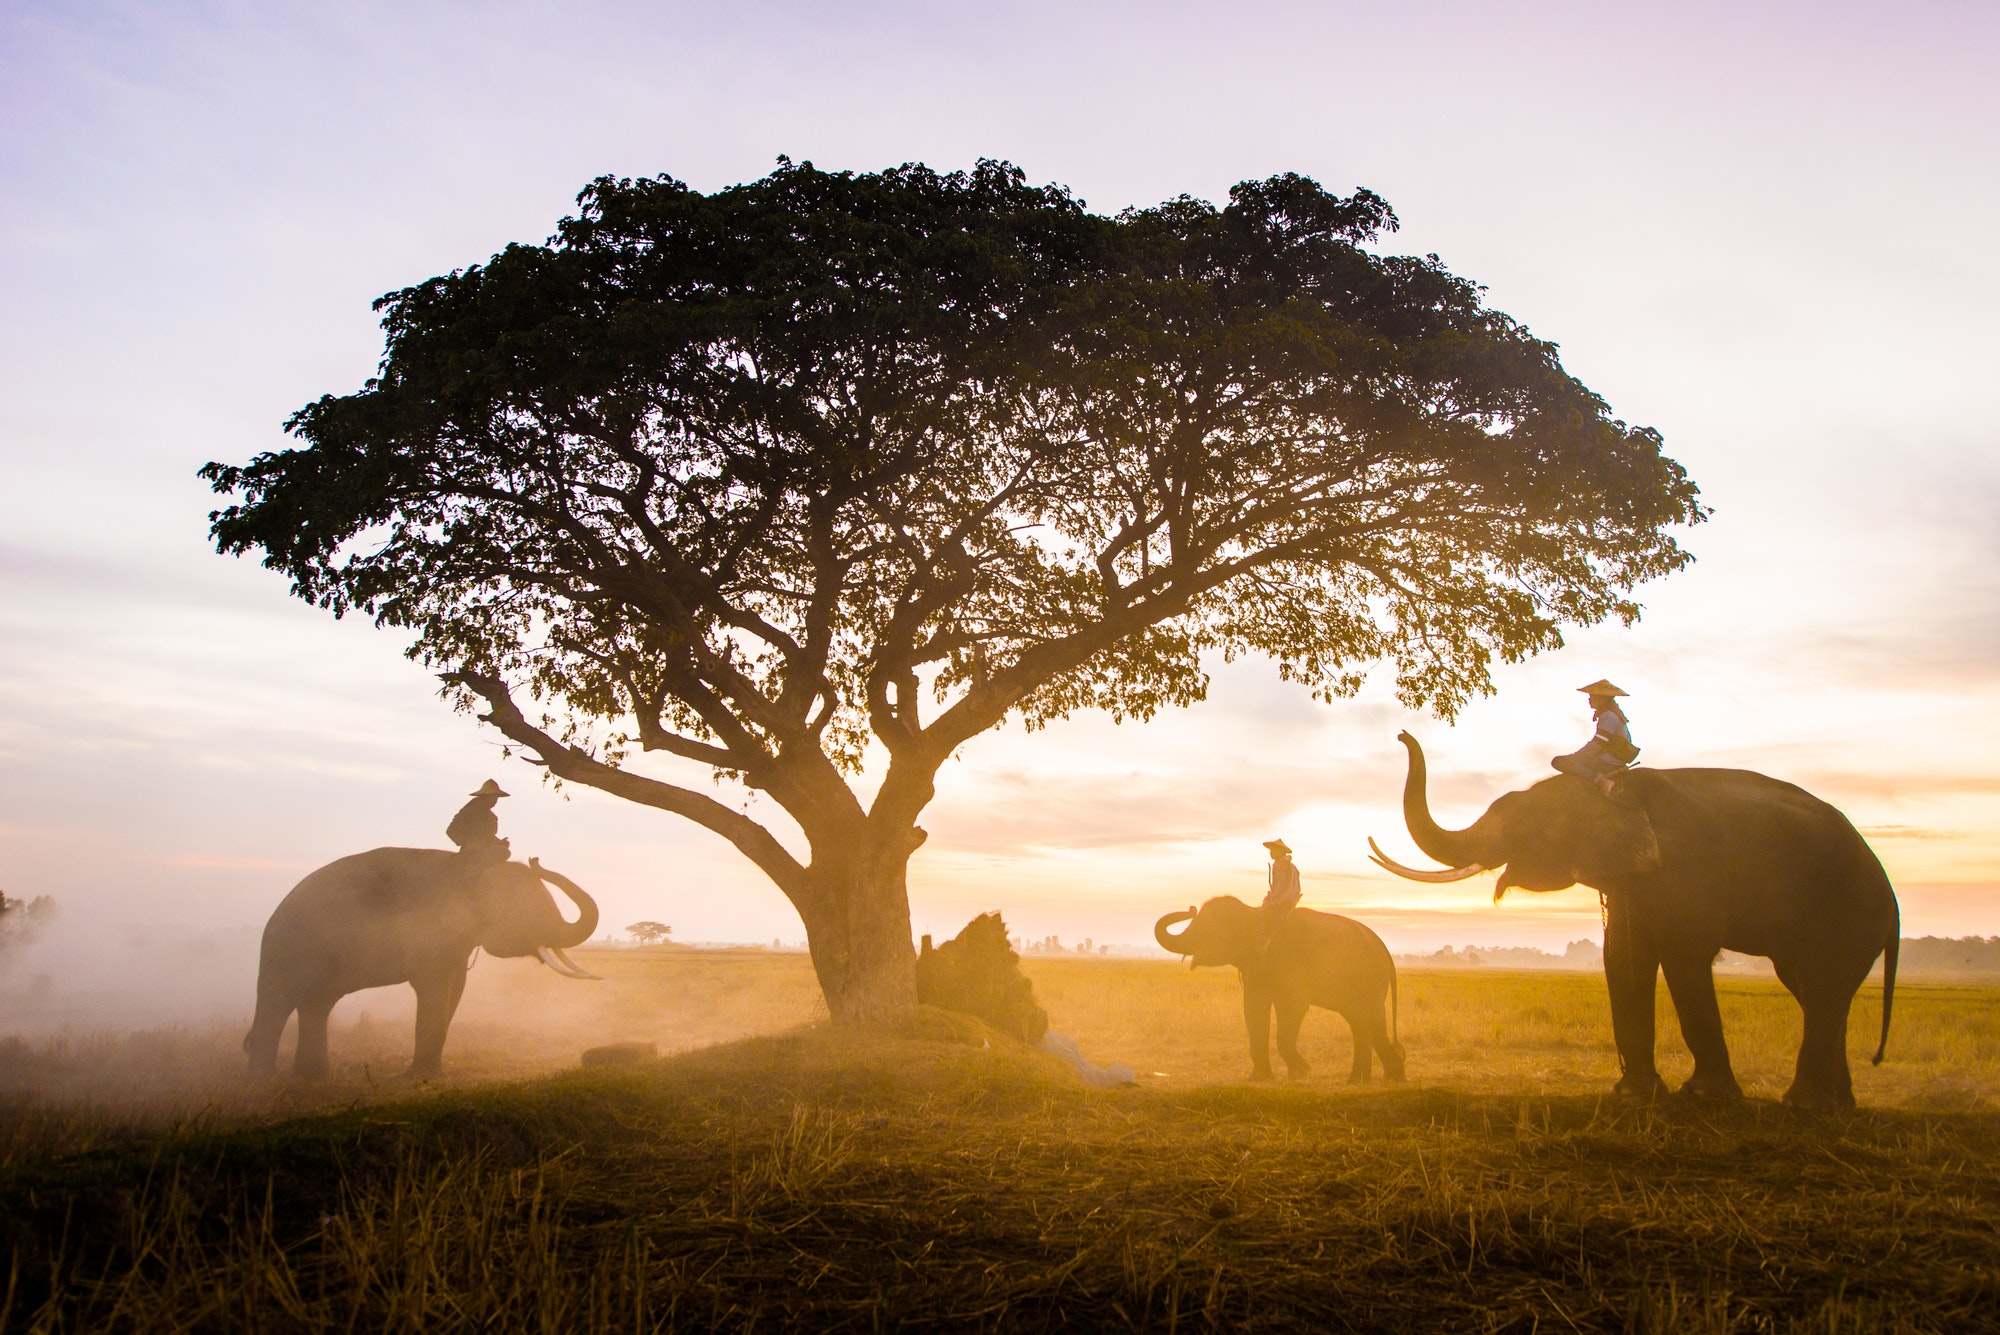 Elephants at sunrise in Thailand